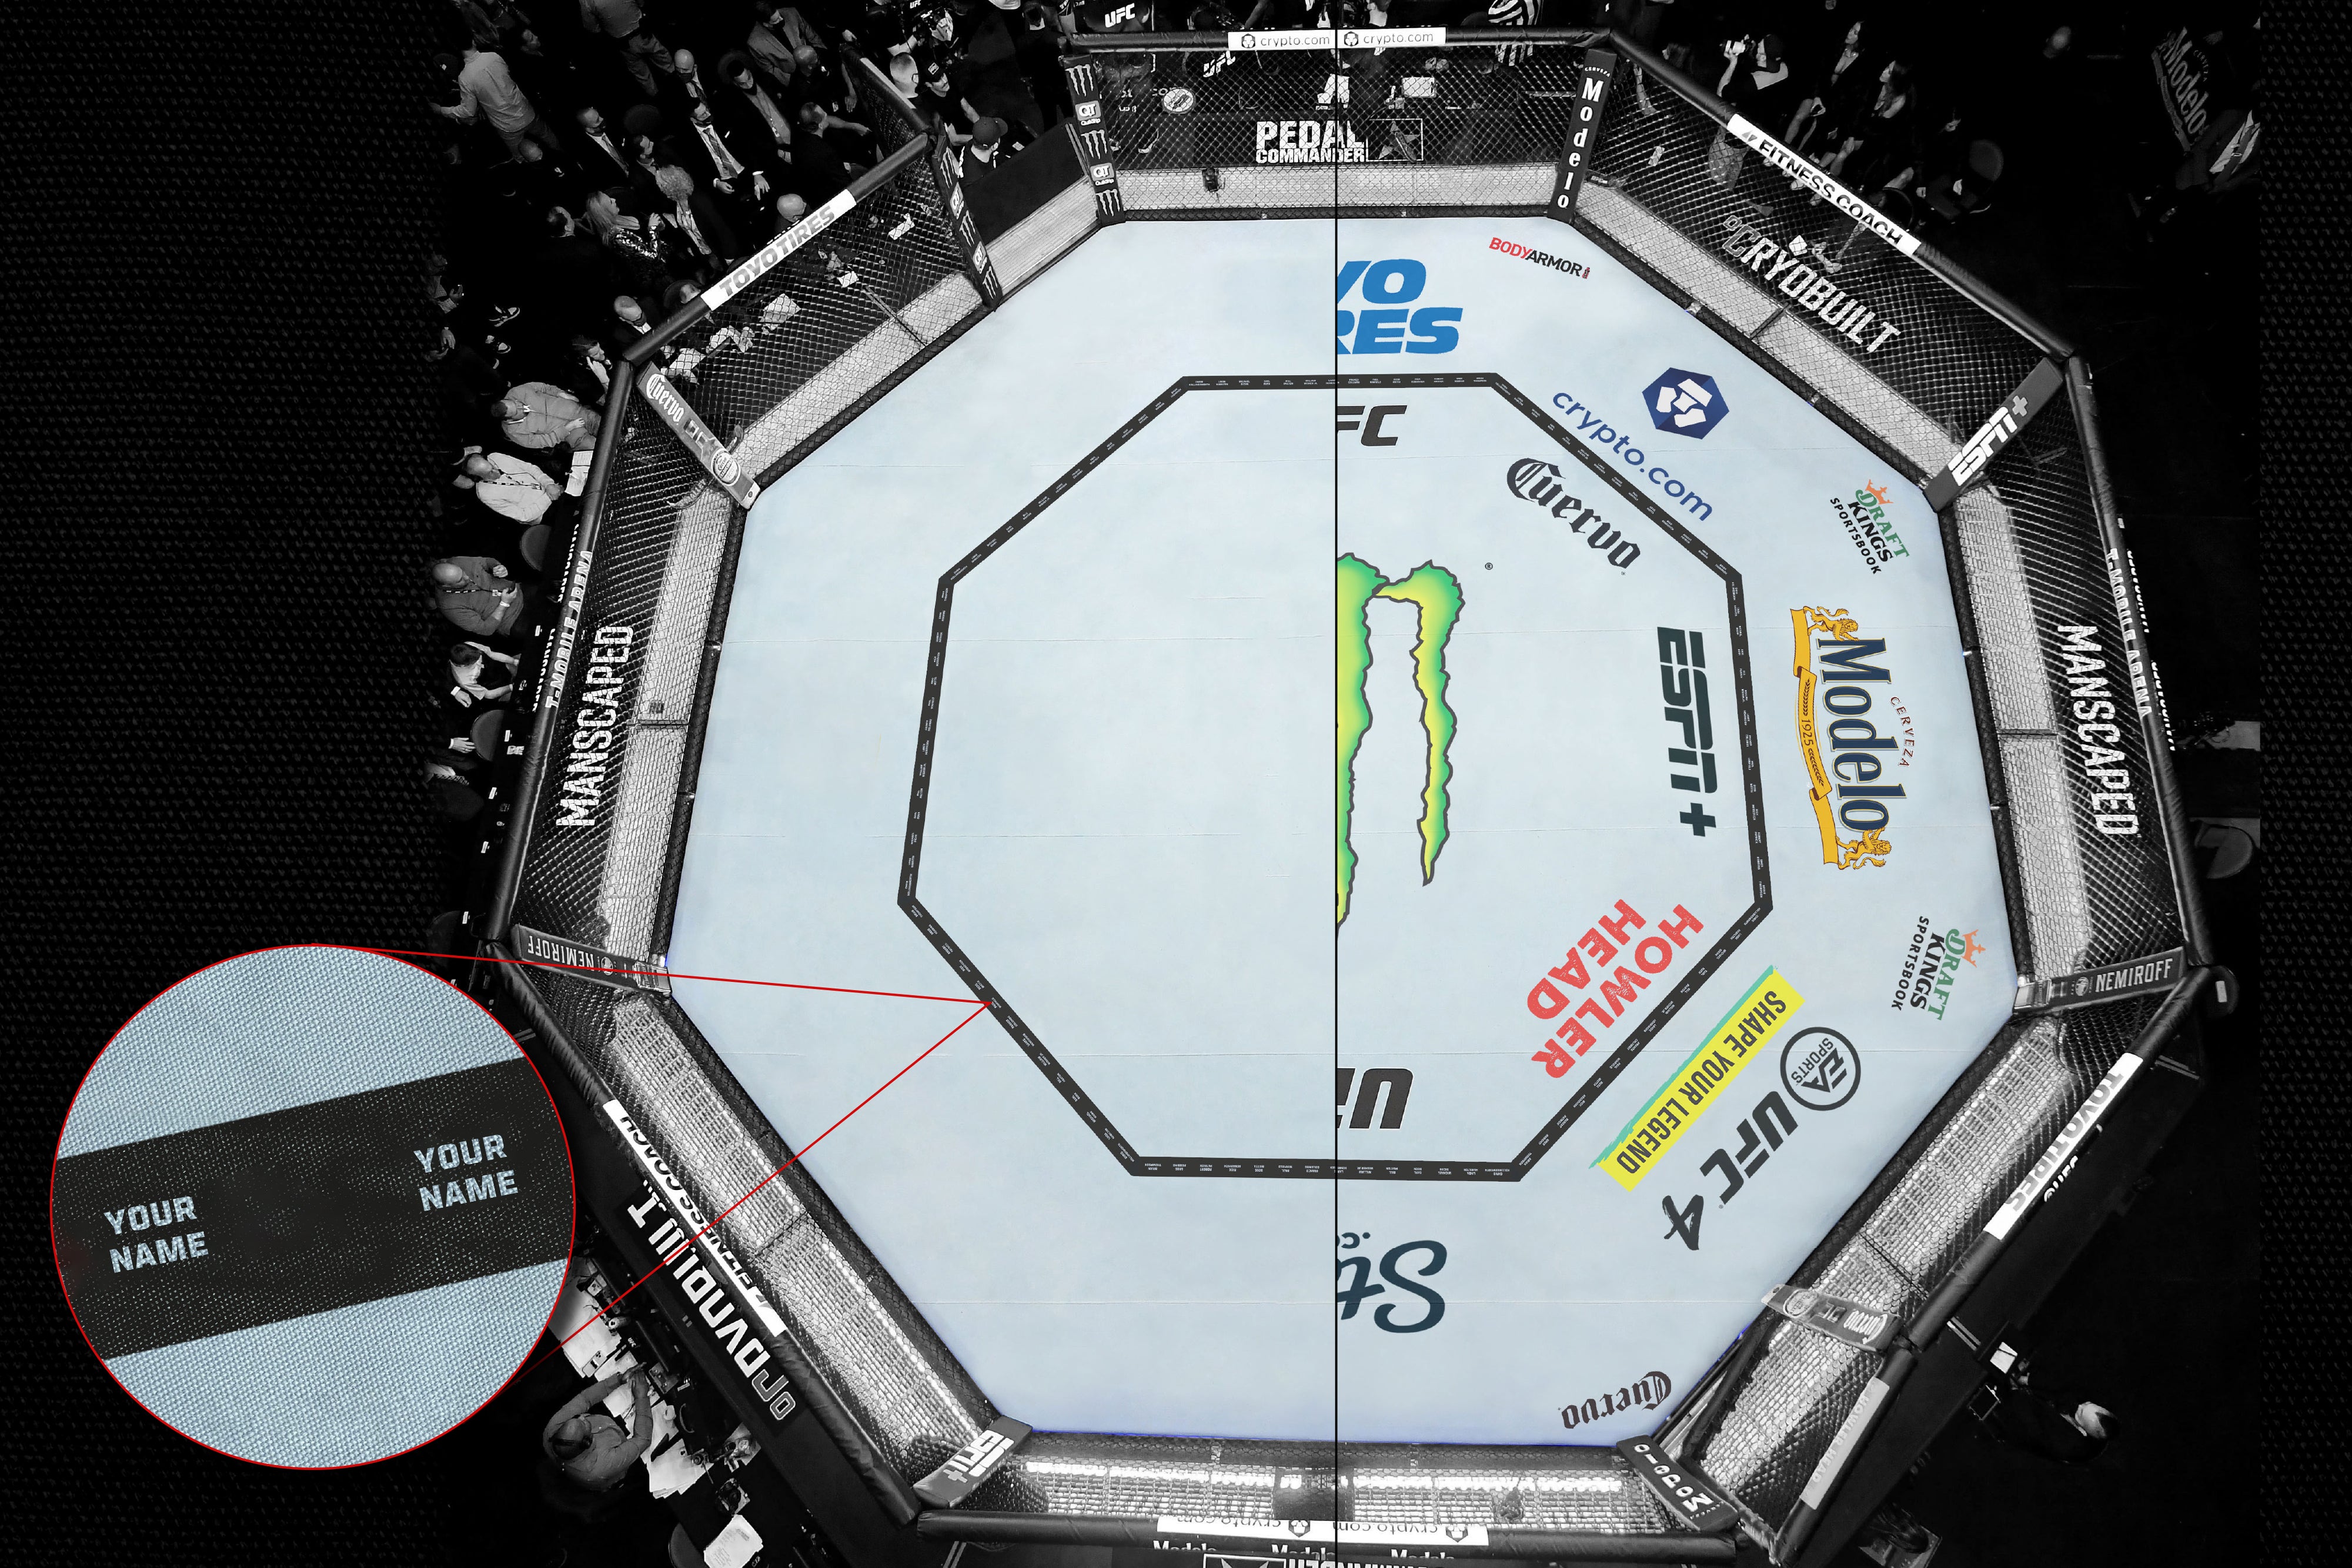 SOLD OUT: UFC 296: Edwards vs Covington Name on Canvas